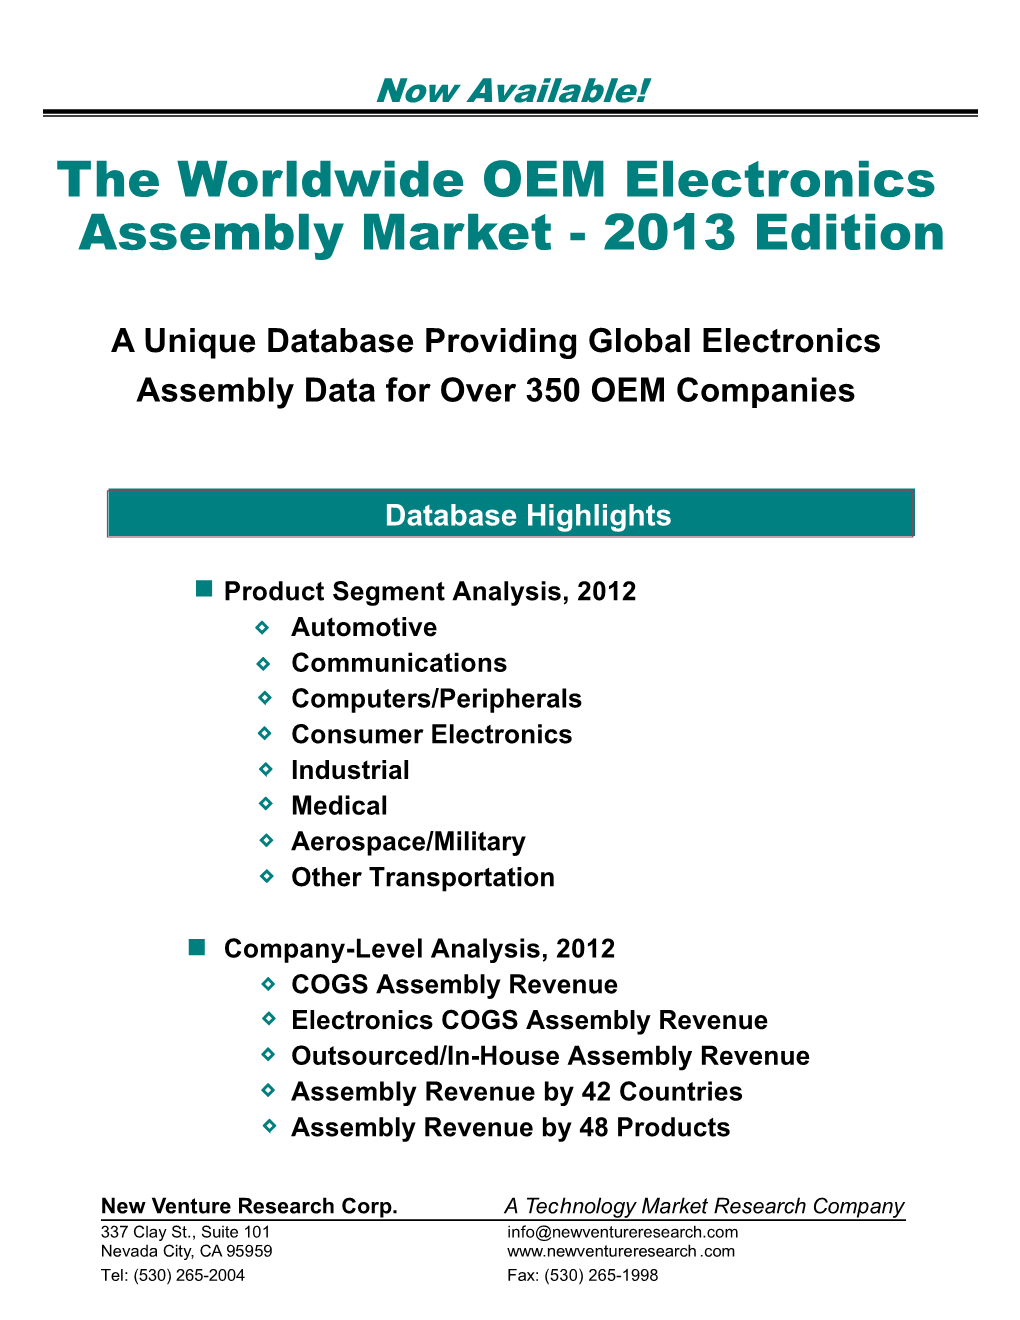 The Worldwide OEM Electronics Assembly Market - 2013 Edition